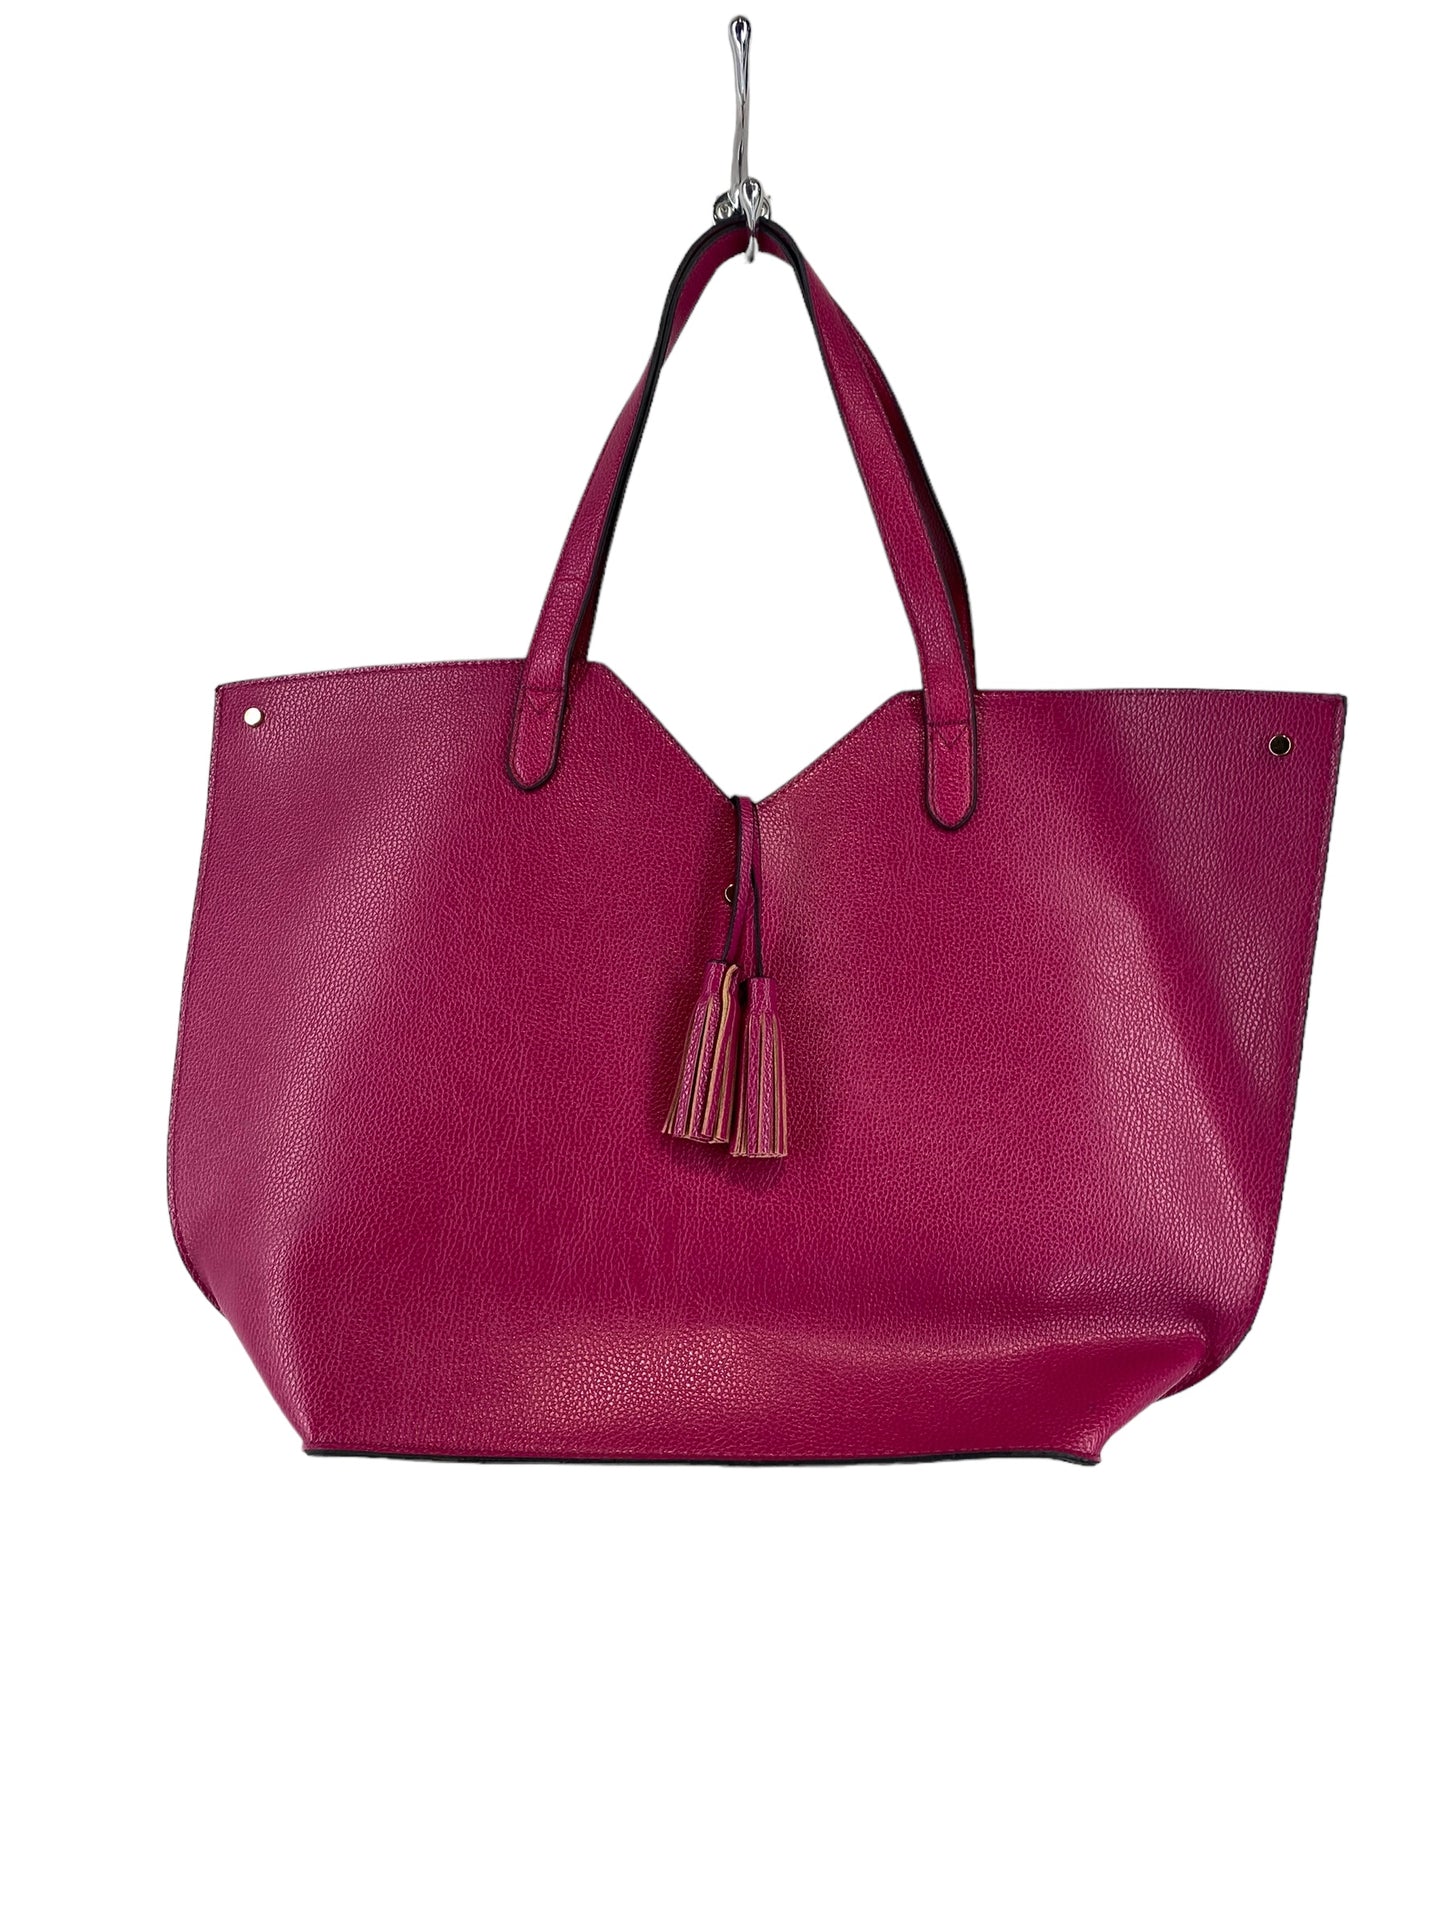 Handbag By Neiman Marcus  Size: Large